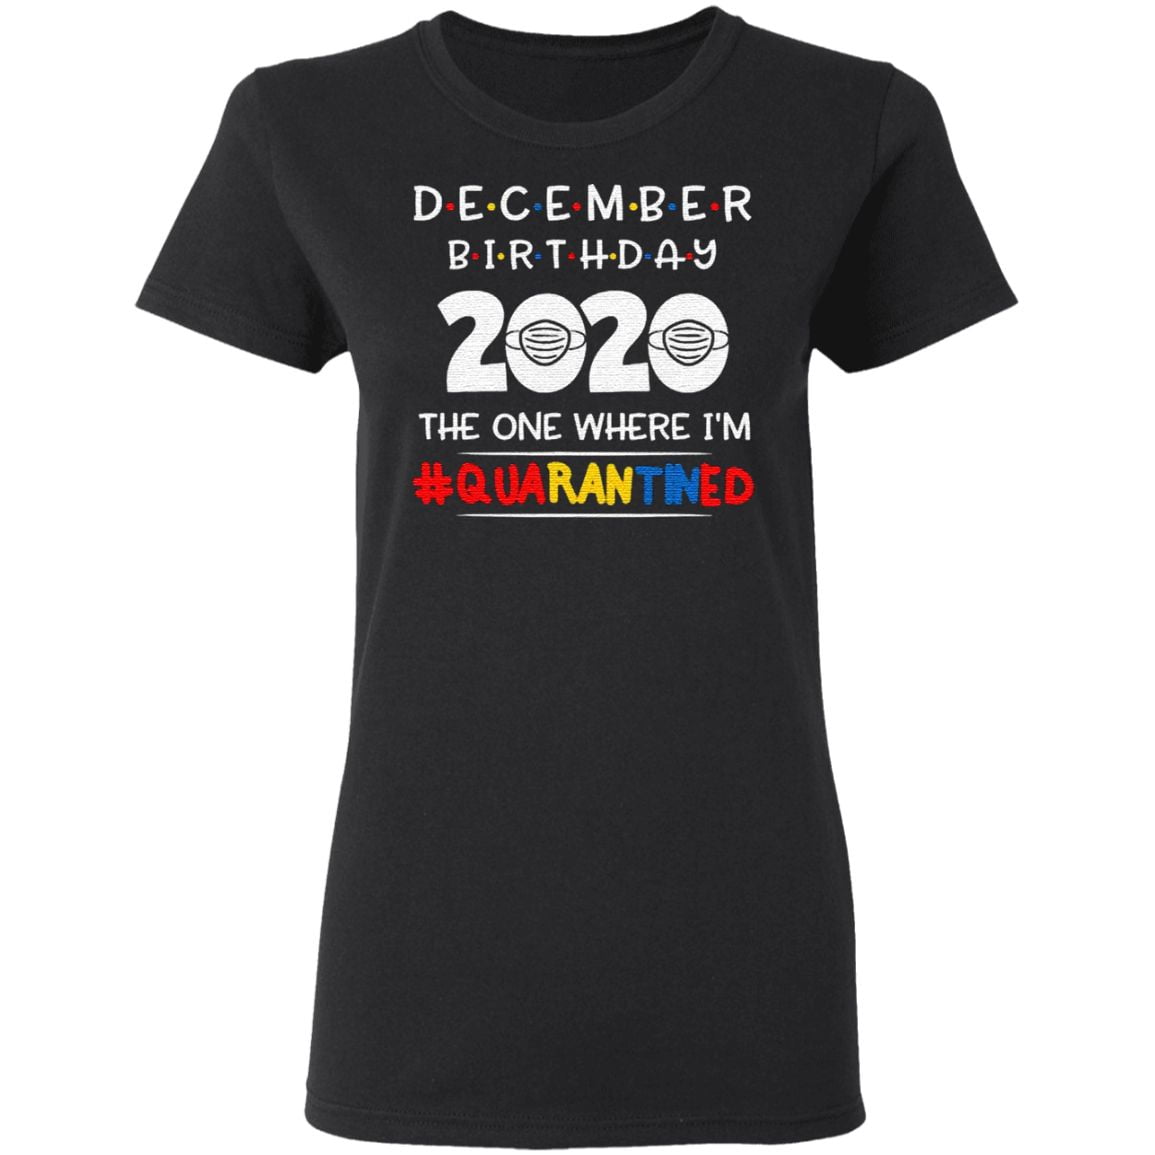 December birthday 2020 the one where i’m quarantined xmas t shirt